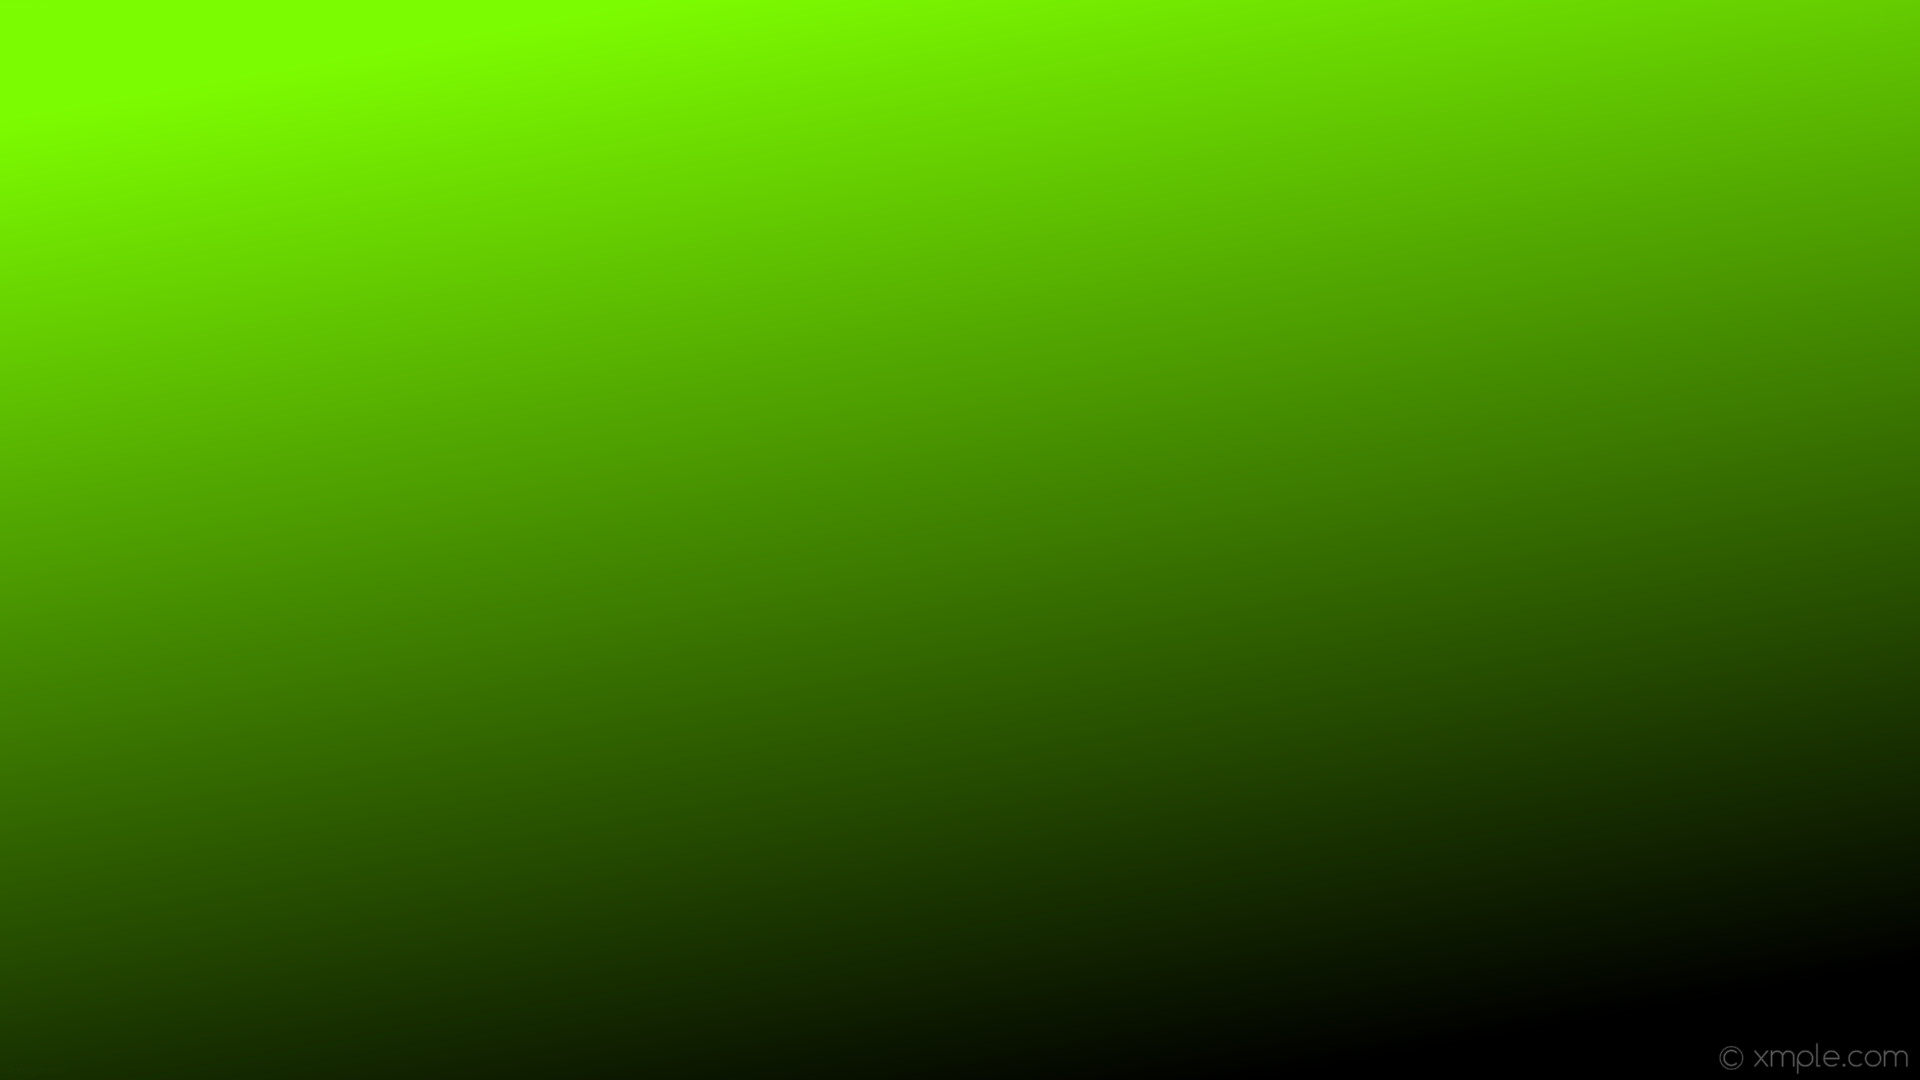 1920x1080 wallpaper green linear black gradient lawn green #7cfc00 #000000 120Â°